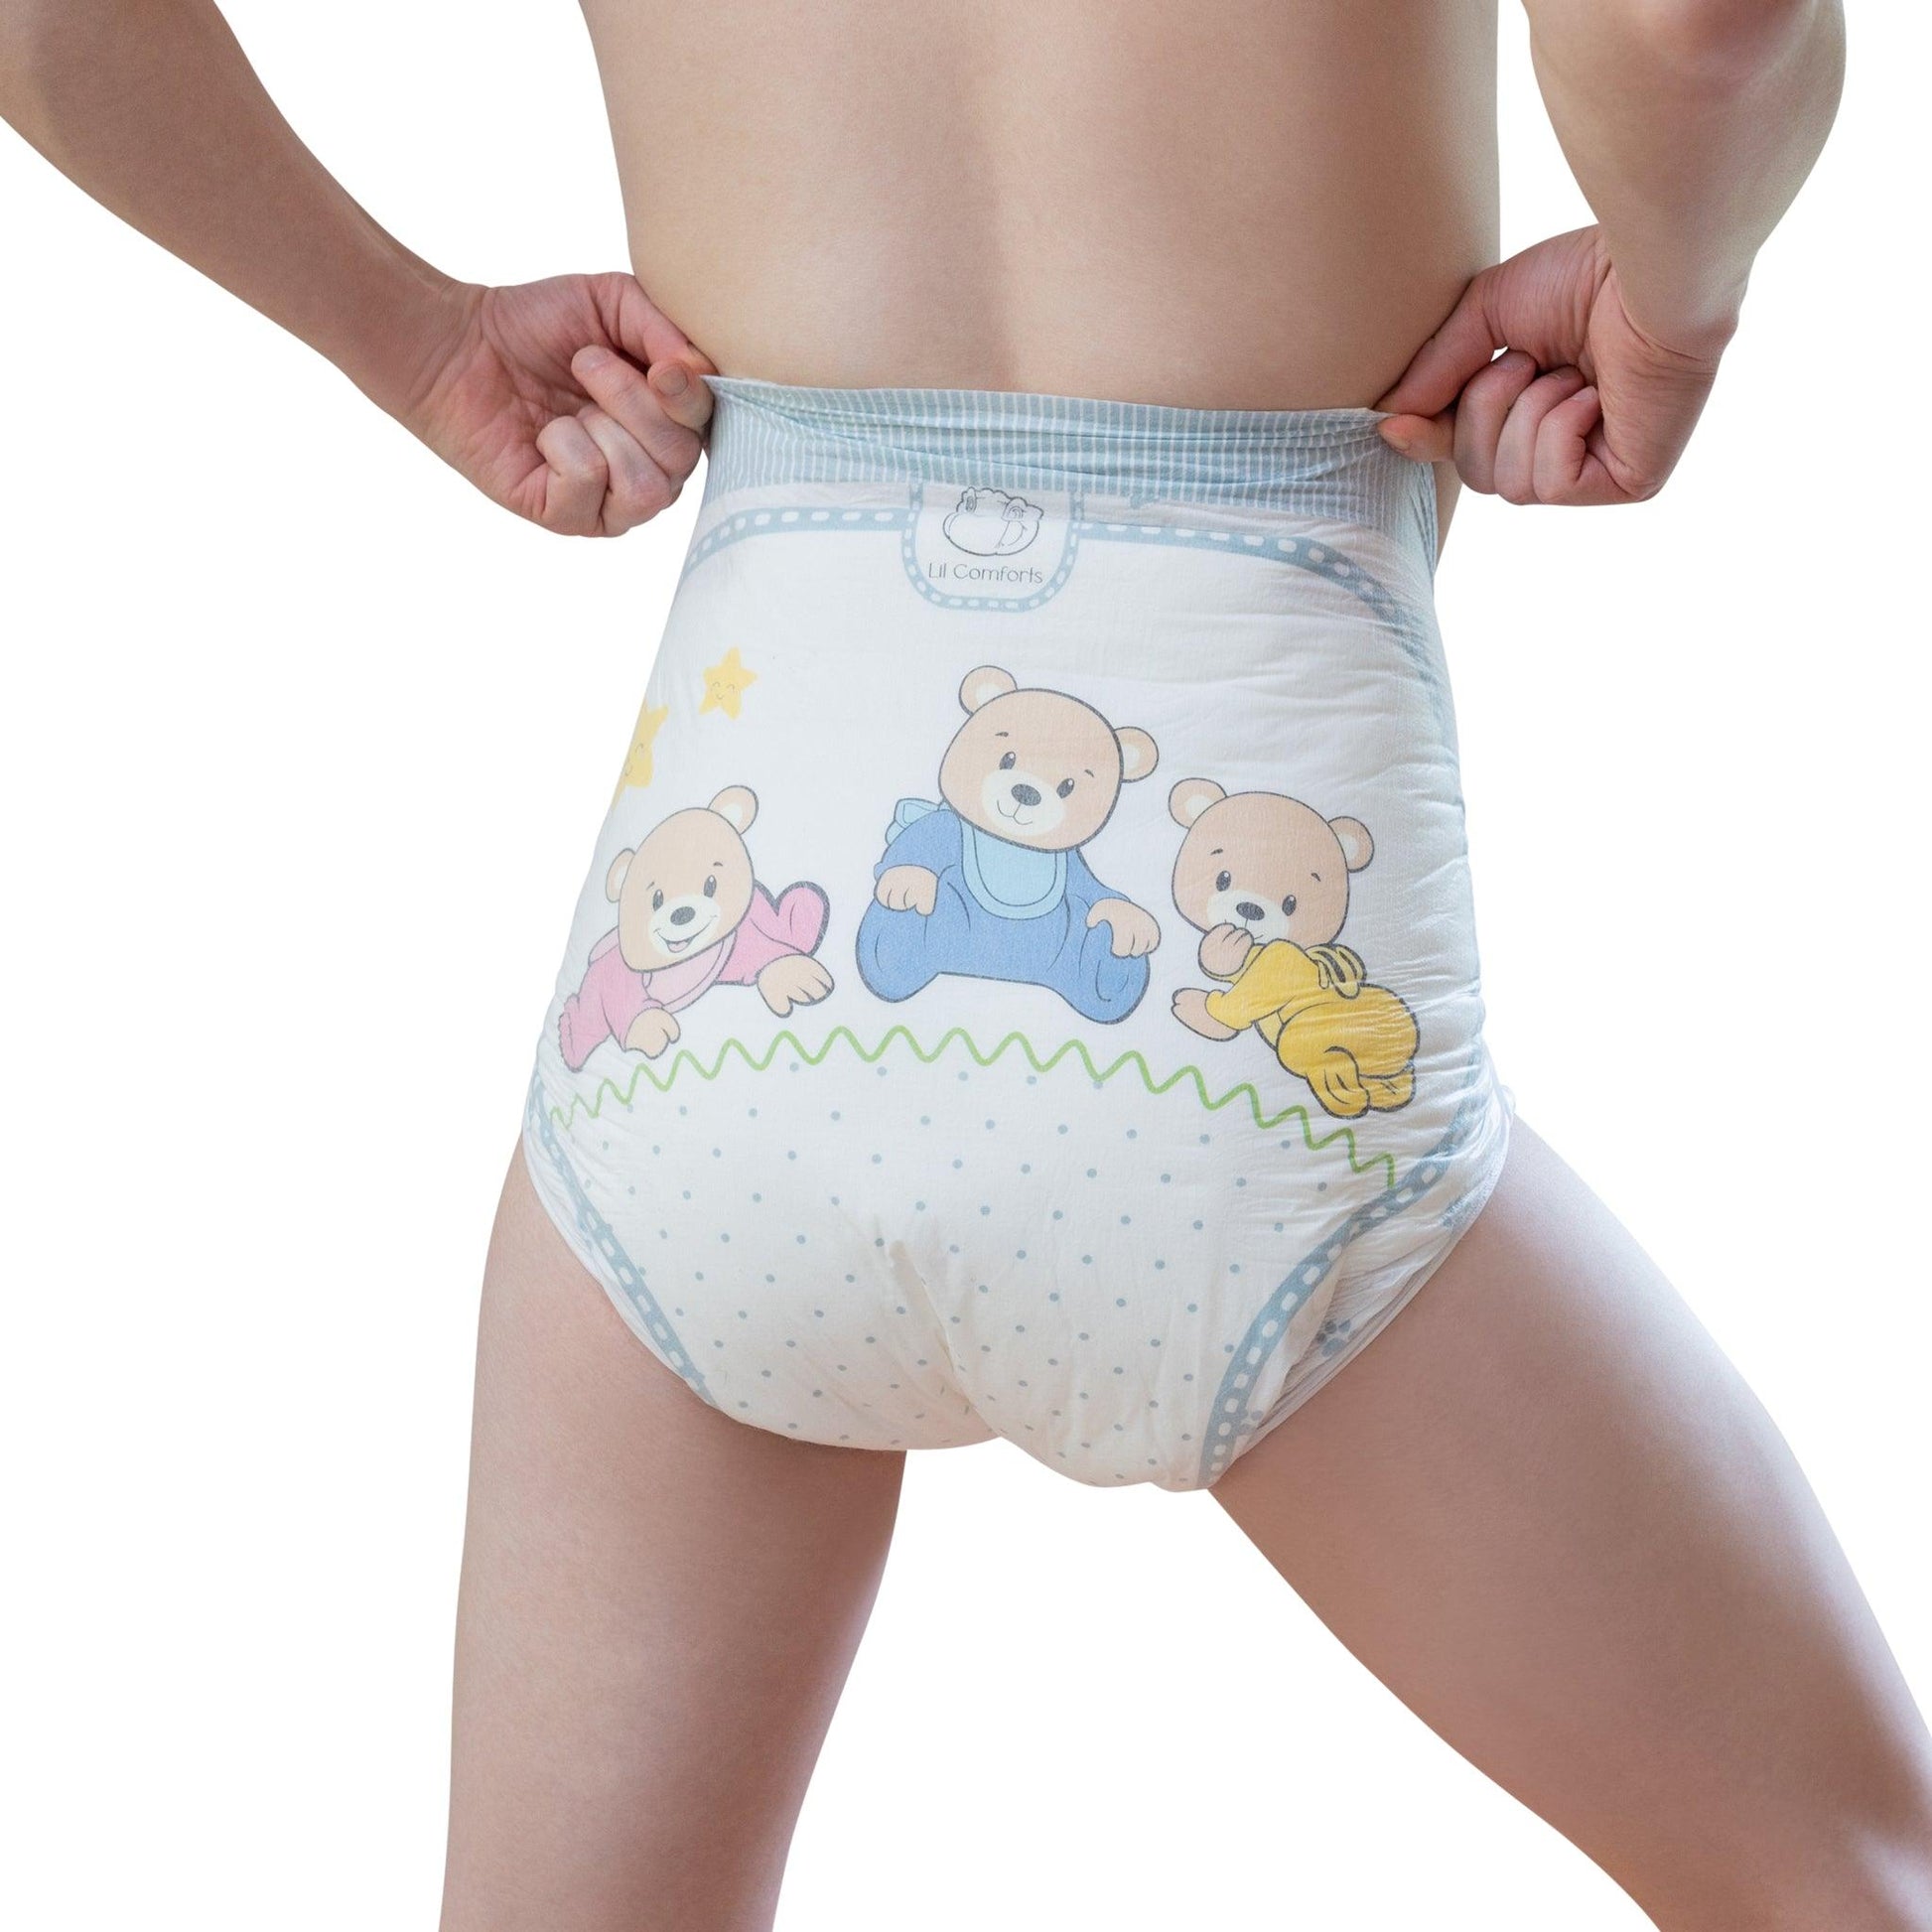 Comfy Cubz- Adult Diapers – Lil Comforts